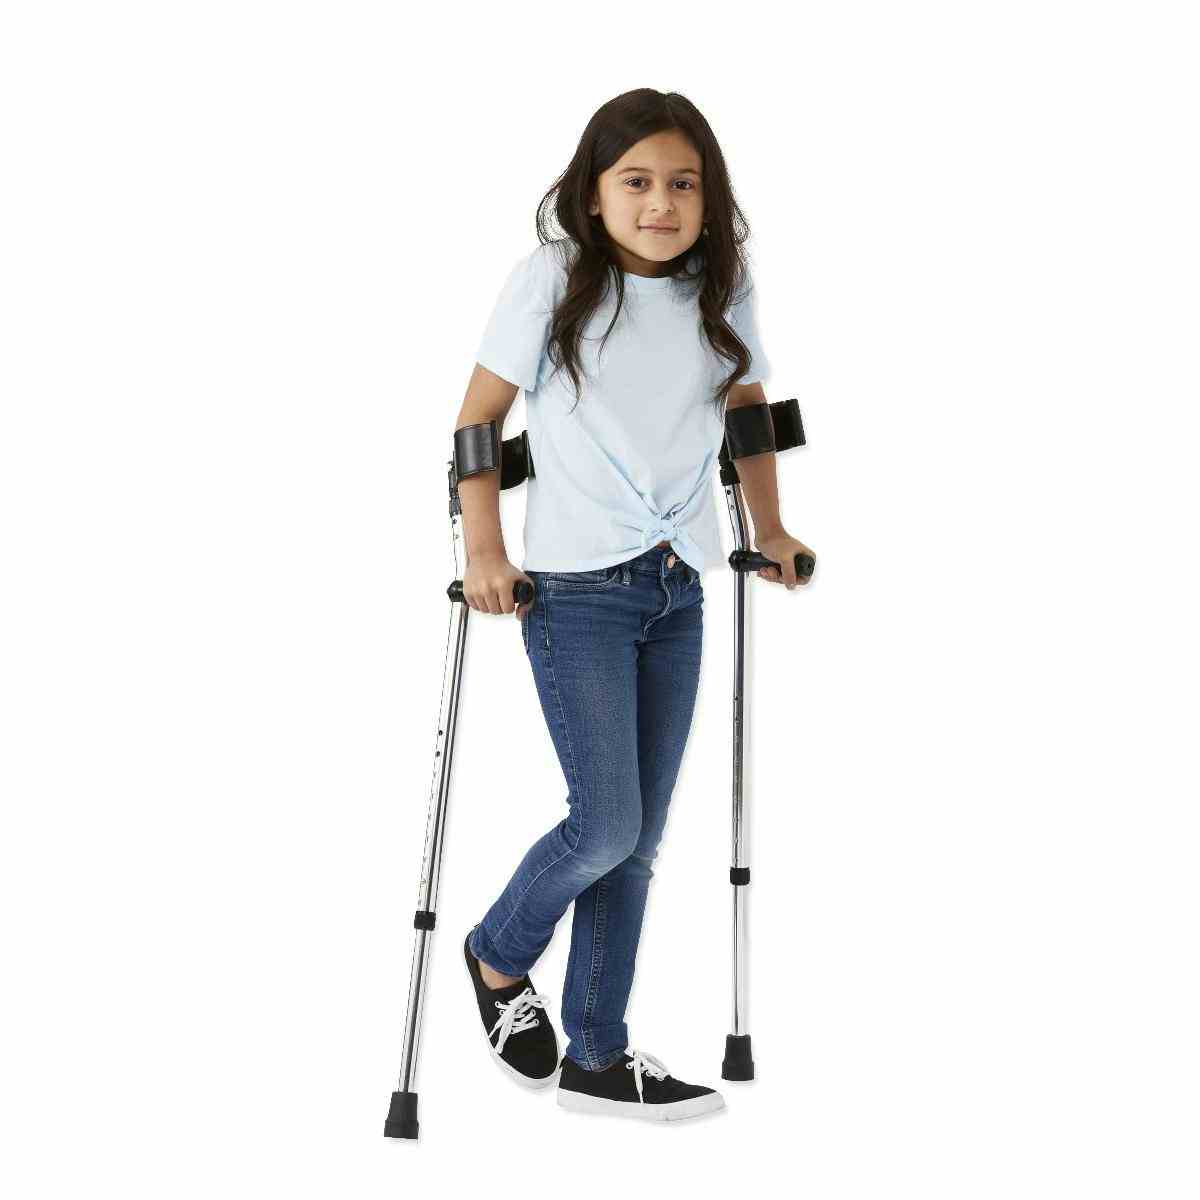 Medline Guardian Aluminum Forearm Crutches, G05163C, Child (3'2" - 4'6") - 1 Pair